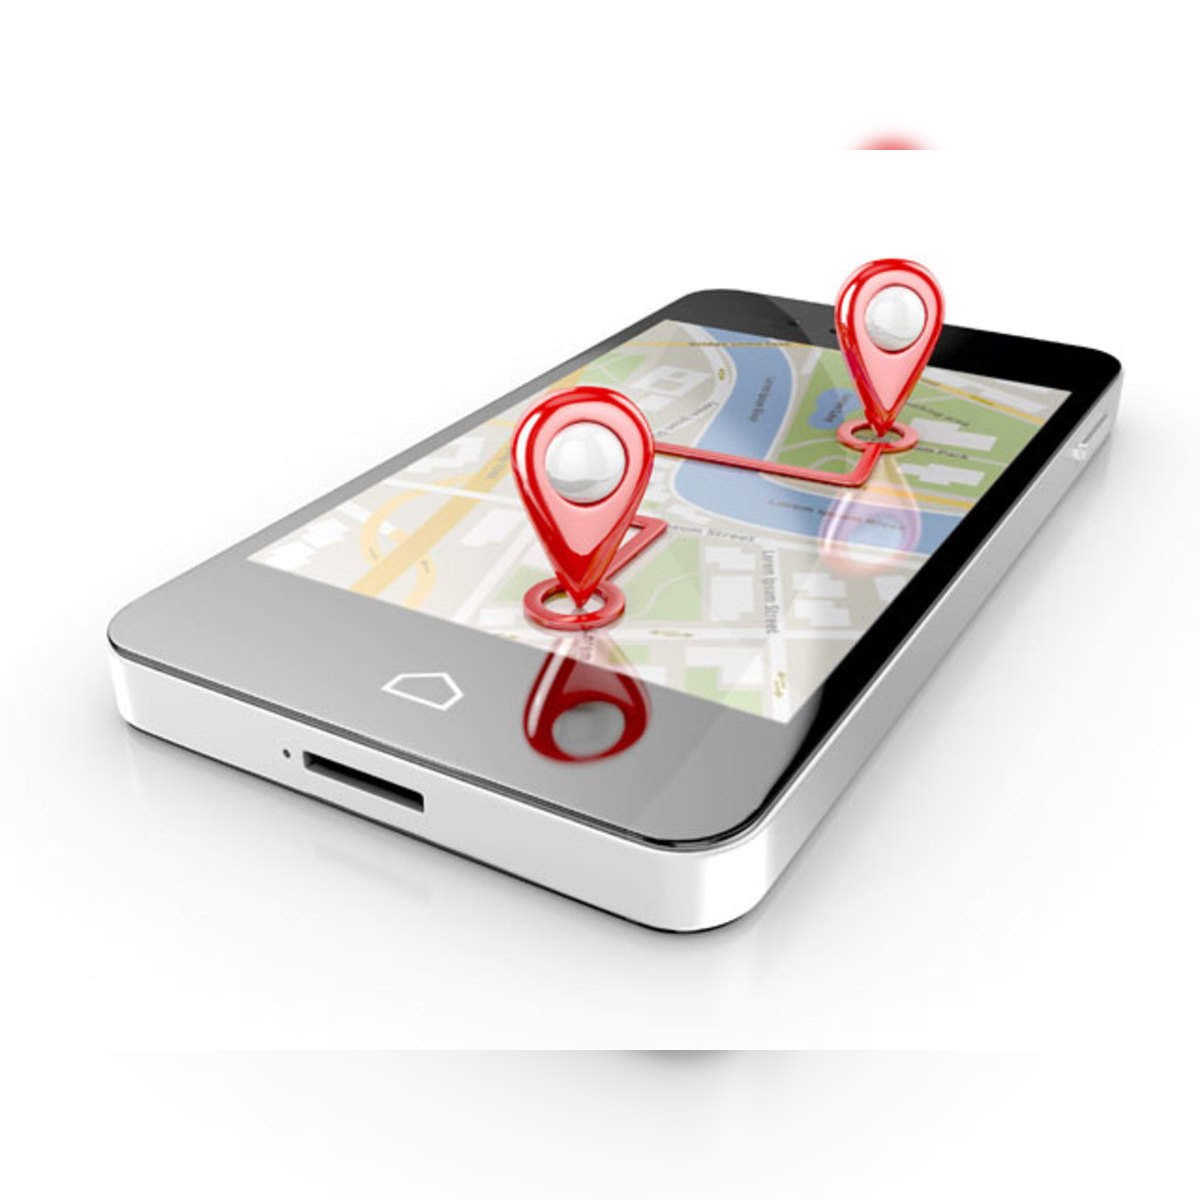 Keychain locator - Mini GPS navigator with 1,5 display - Navigation for  hiking